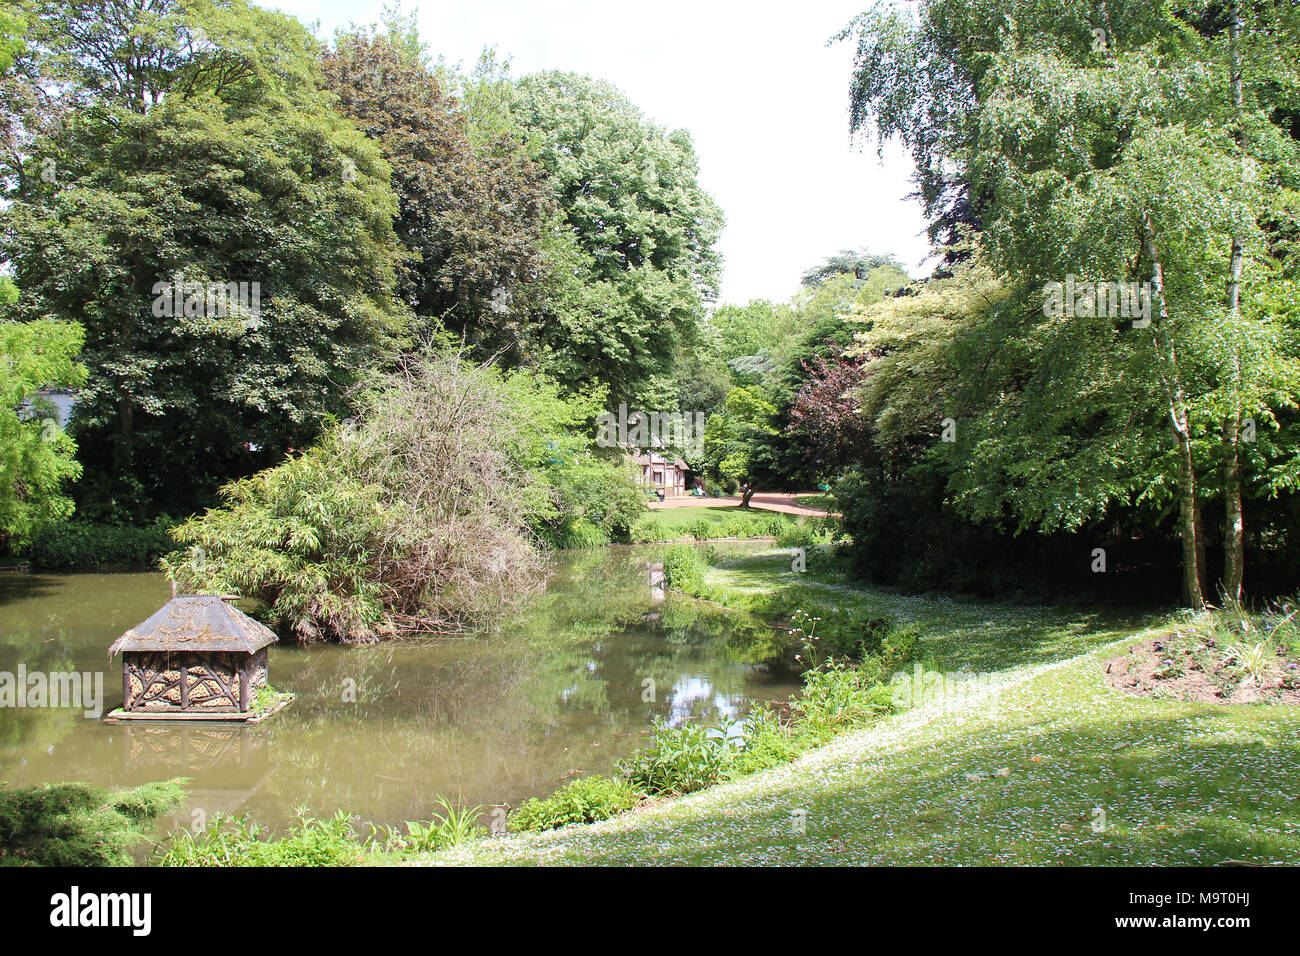 The Vauban garden in Lille (France Stock Photo - Alamy